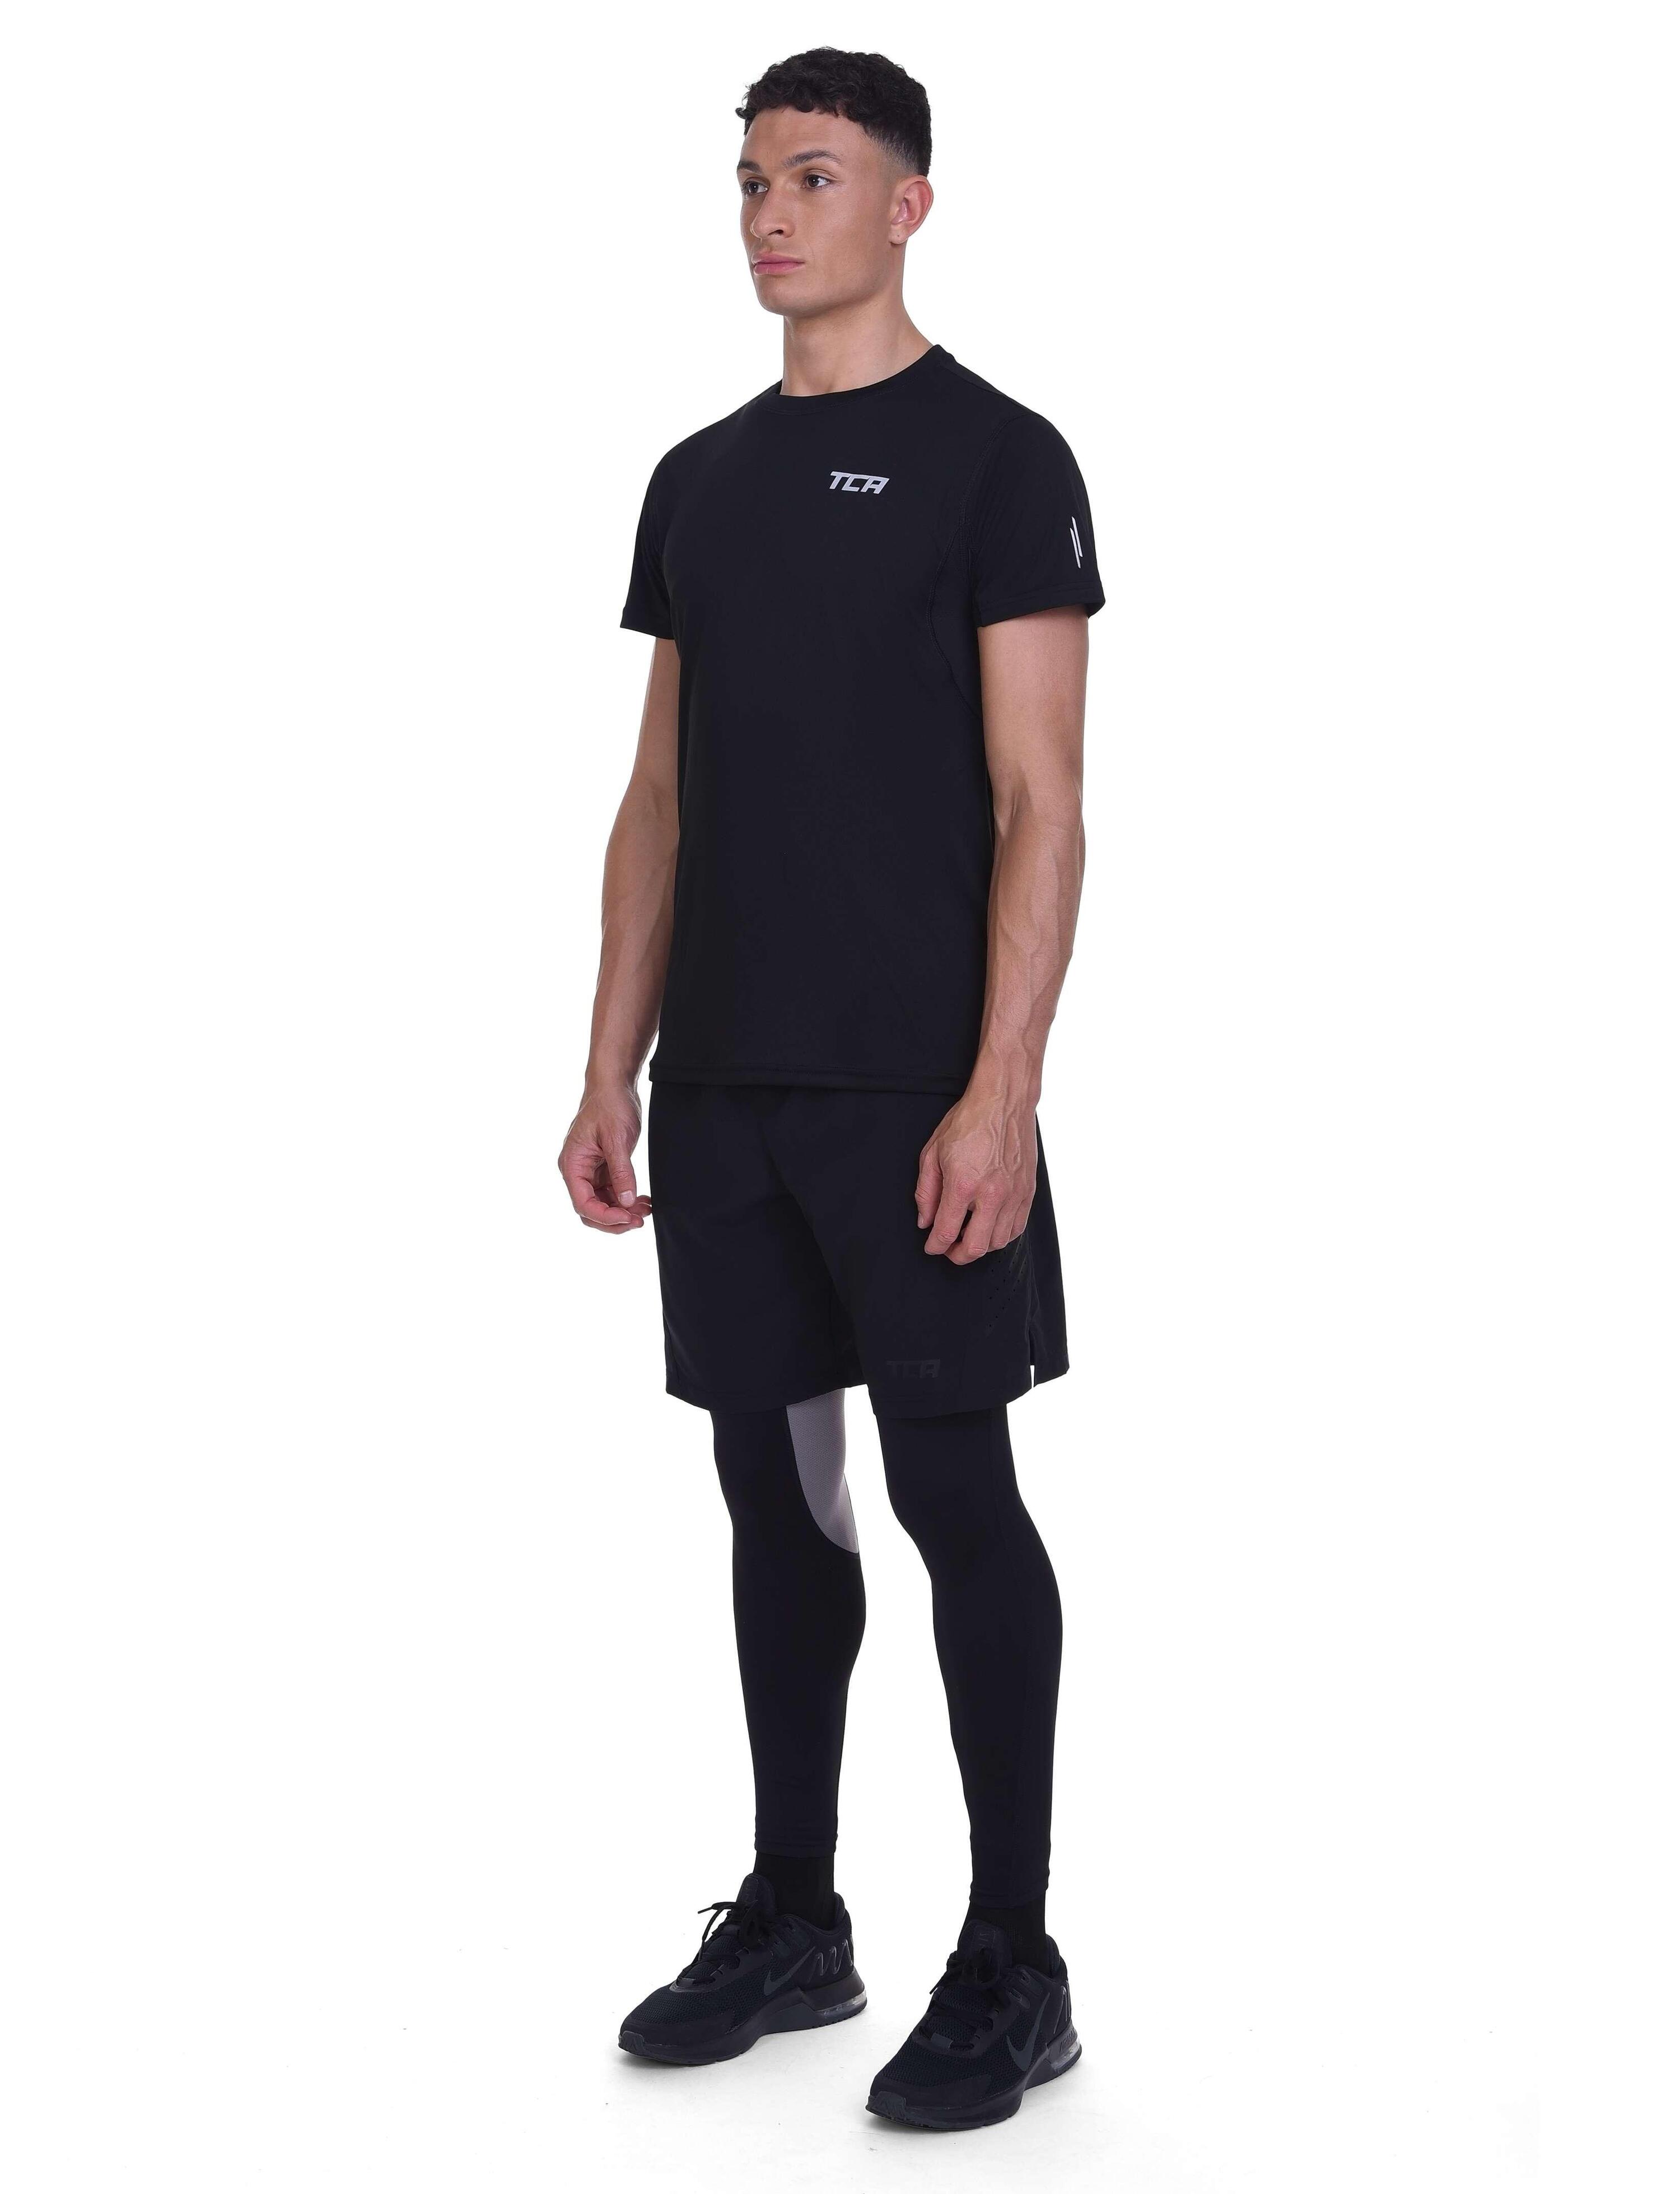 Men's Super Thermal Compression Leggings - Black/Cool Grey 3/6